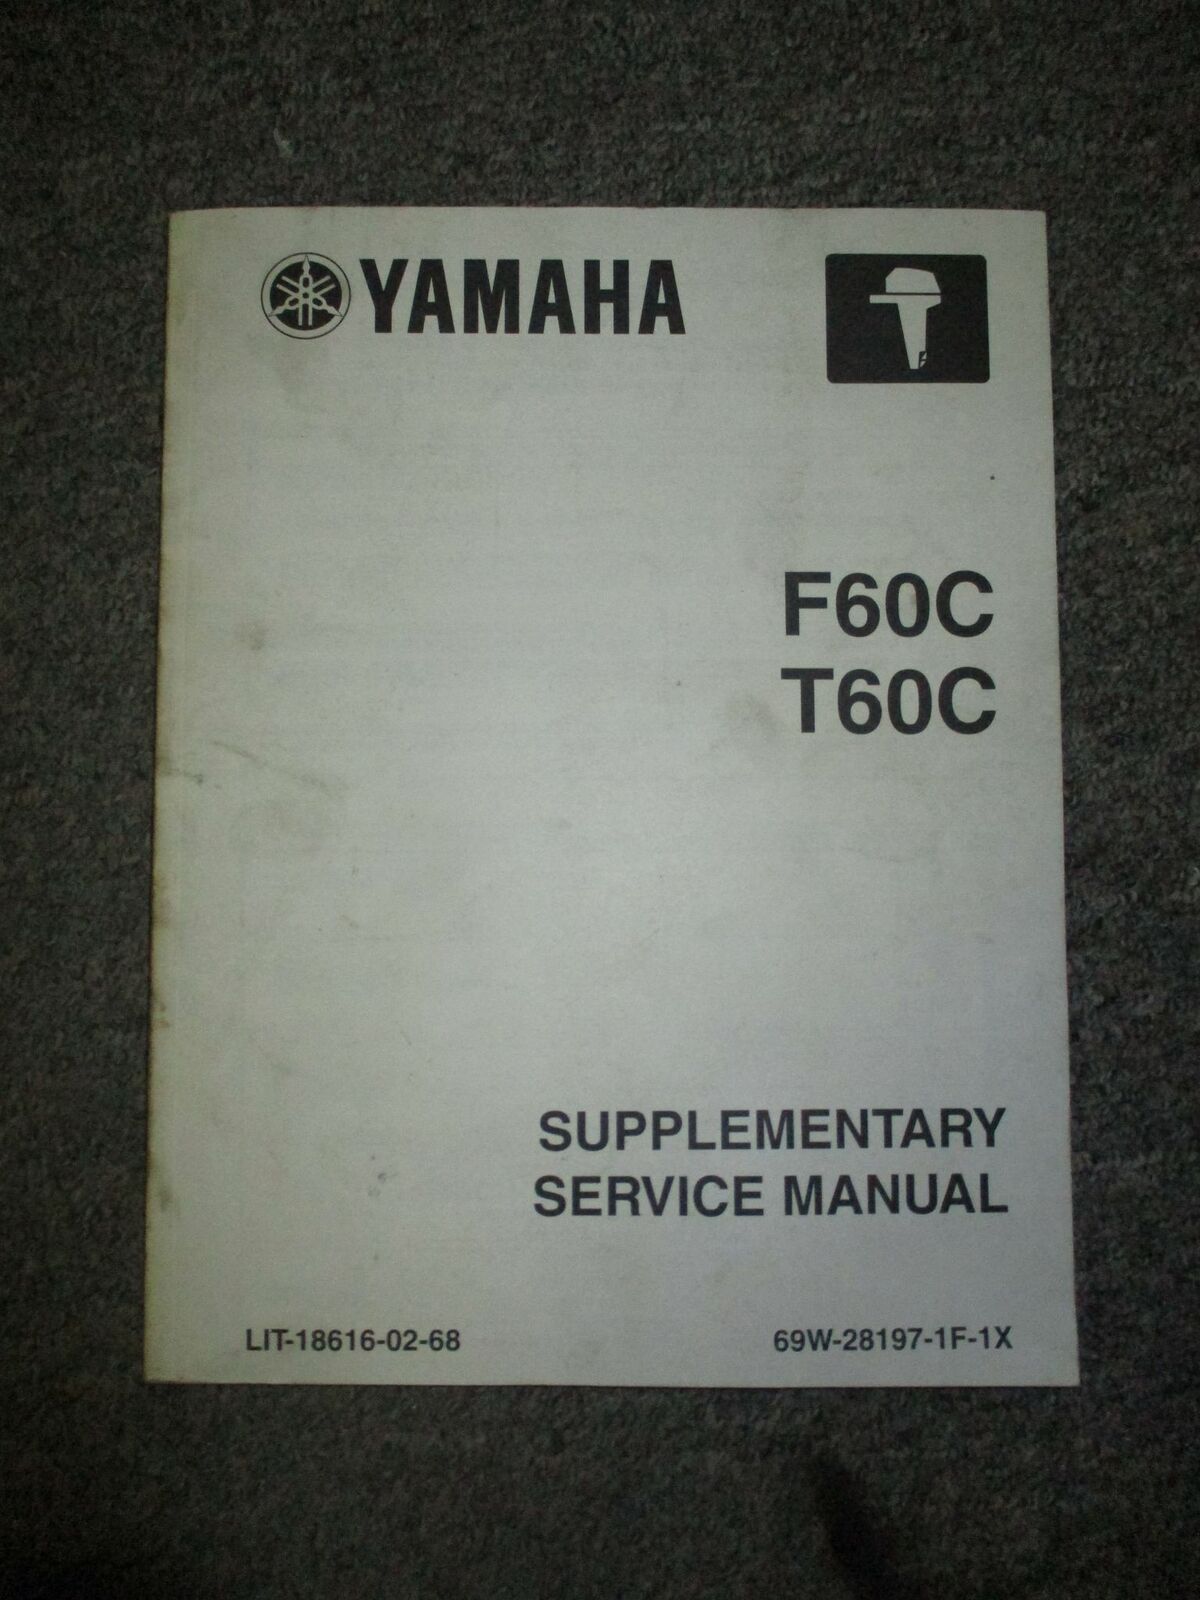 Yamaha F60C T60C Supplementary Service Manual [LIT-18616-02-68]